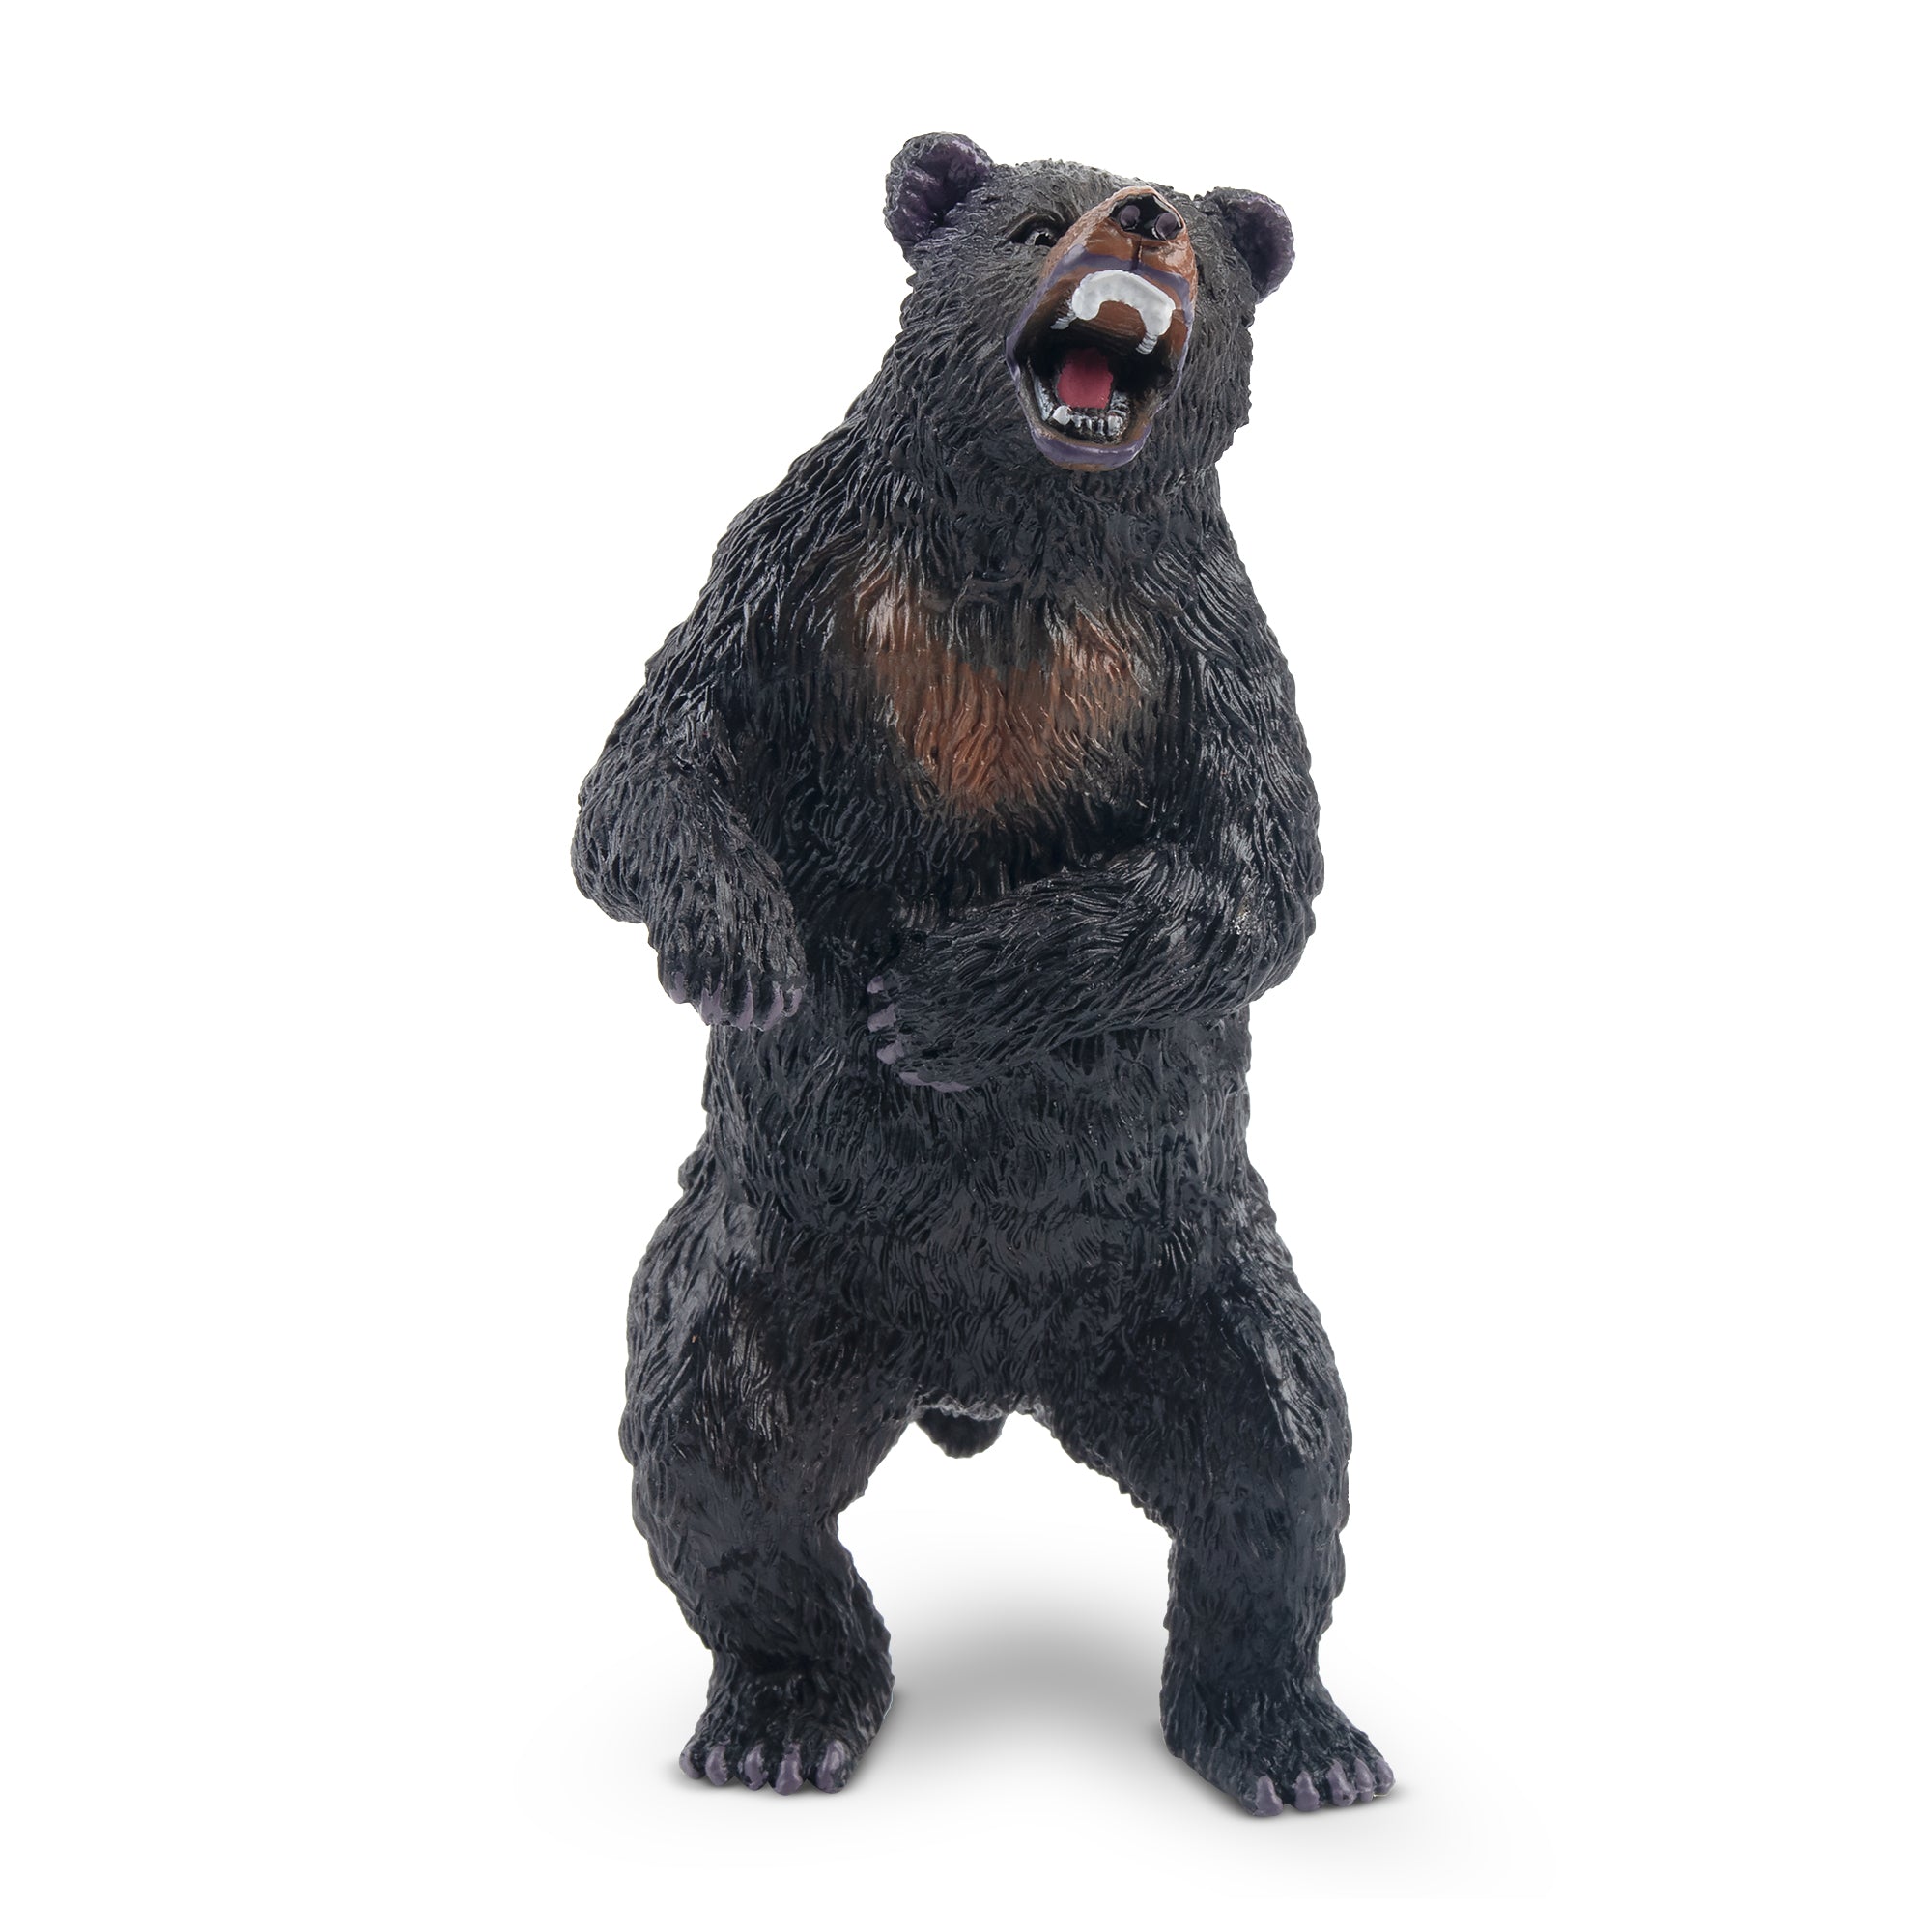 Toymany Standing Black Bear Figurine Toy